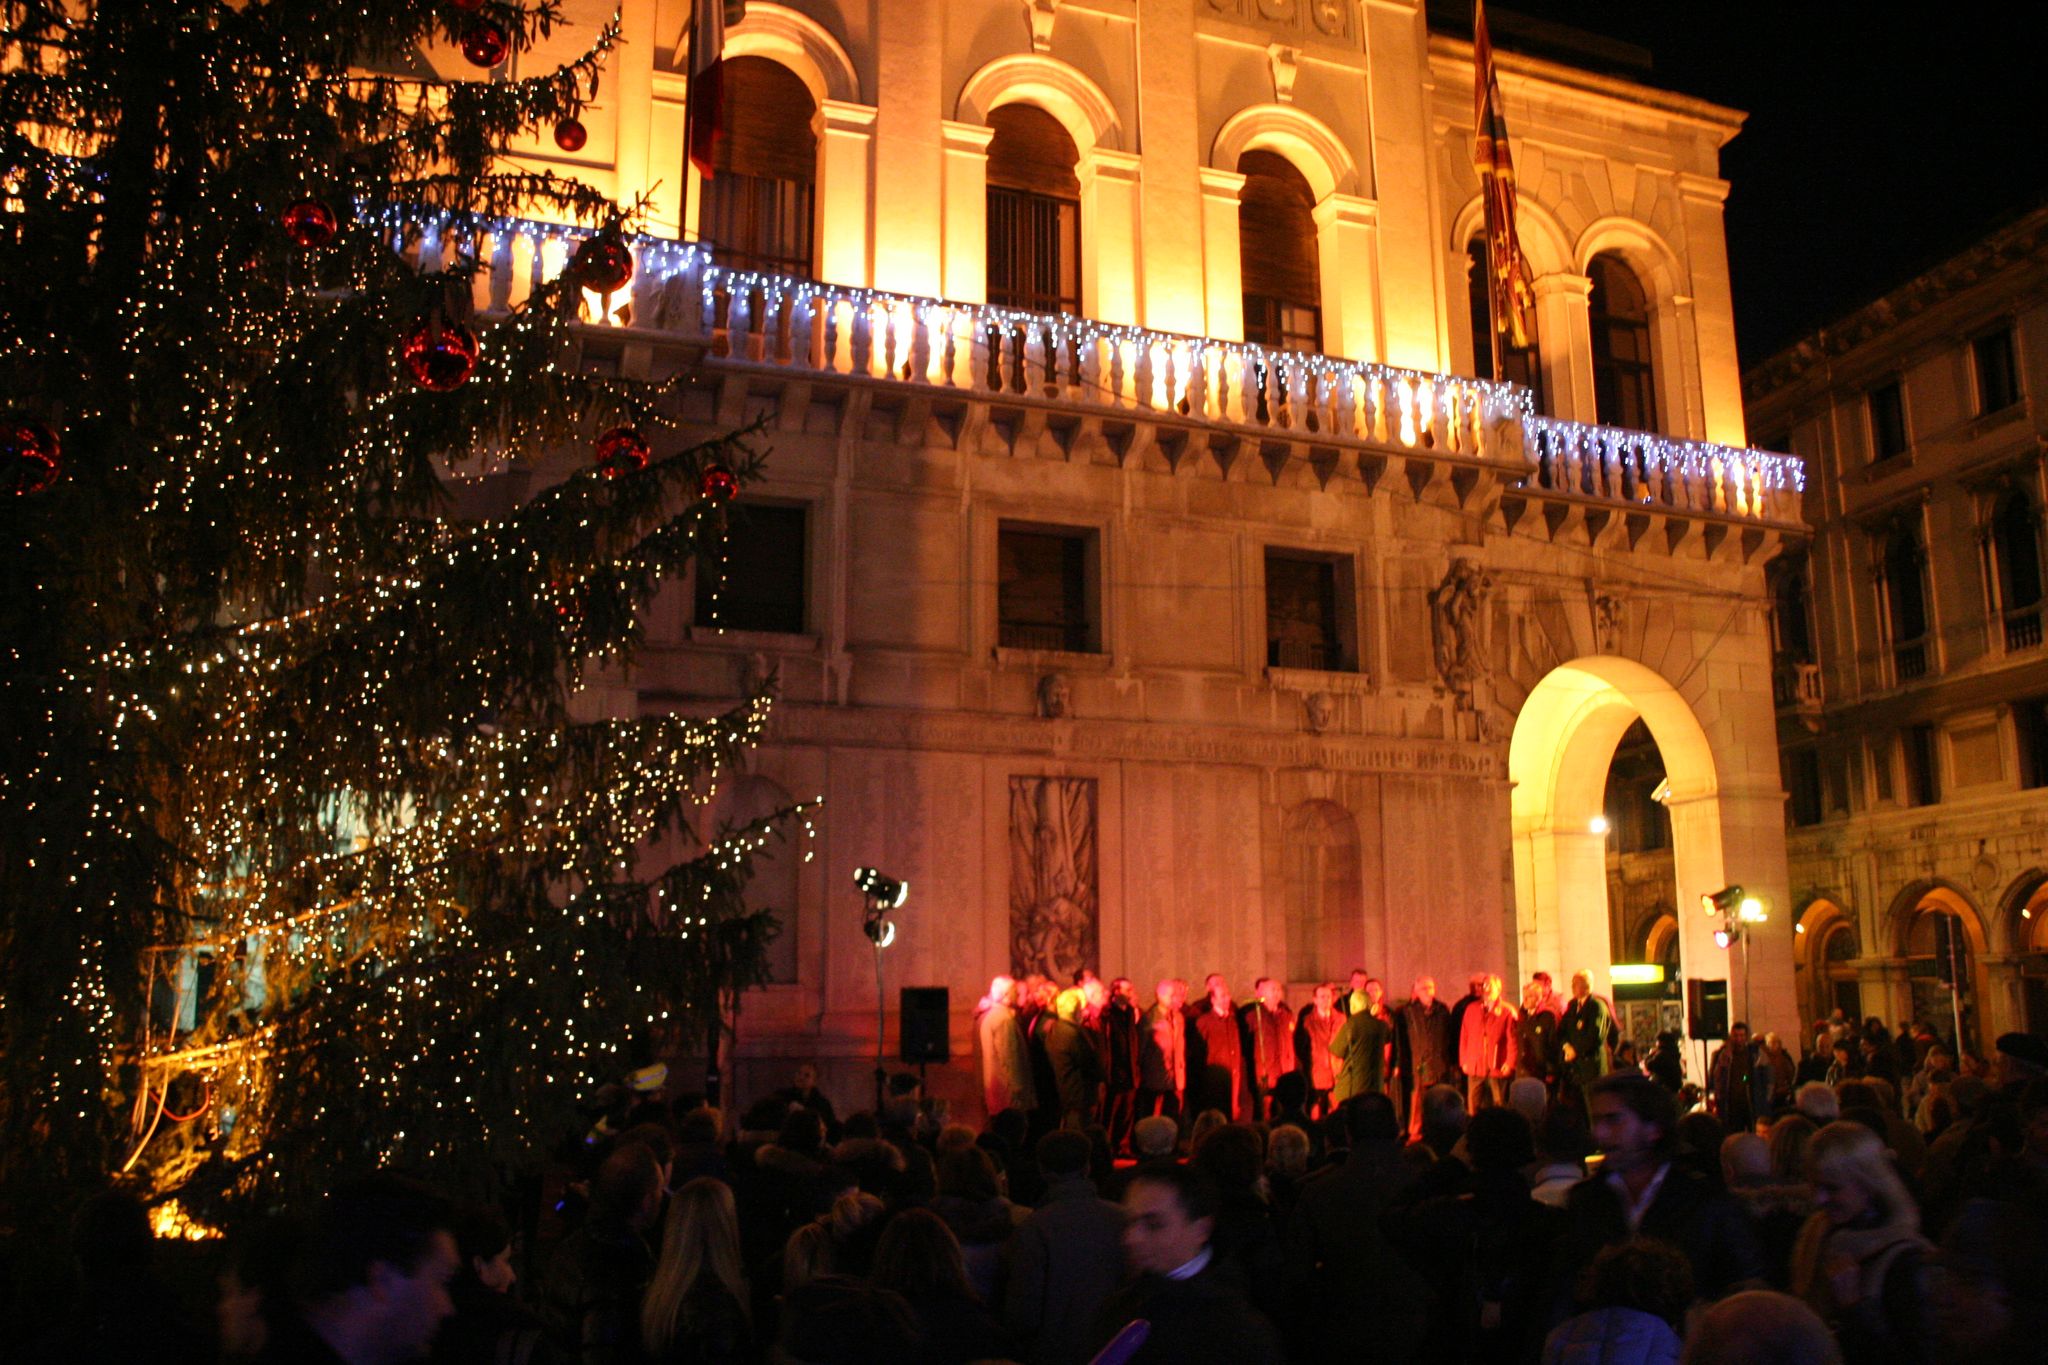 Concerto davanti Palazzo Moroni - Natale 2009 - 05-12-2009 - 100.JPG